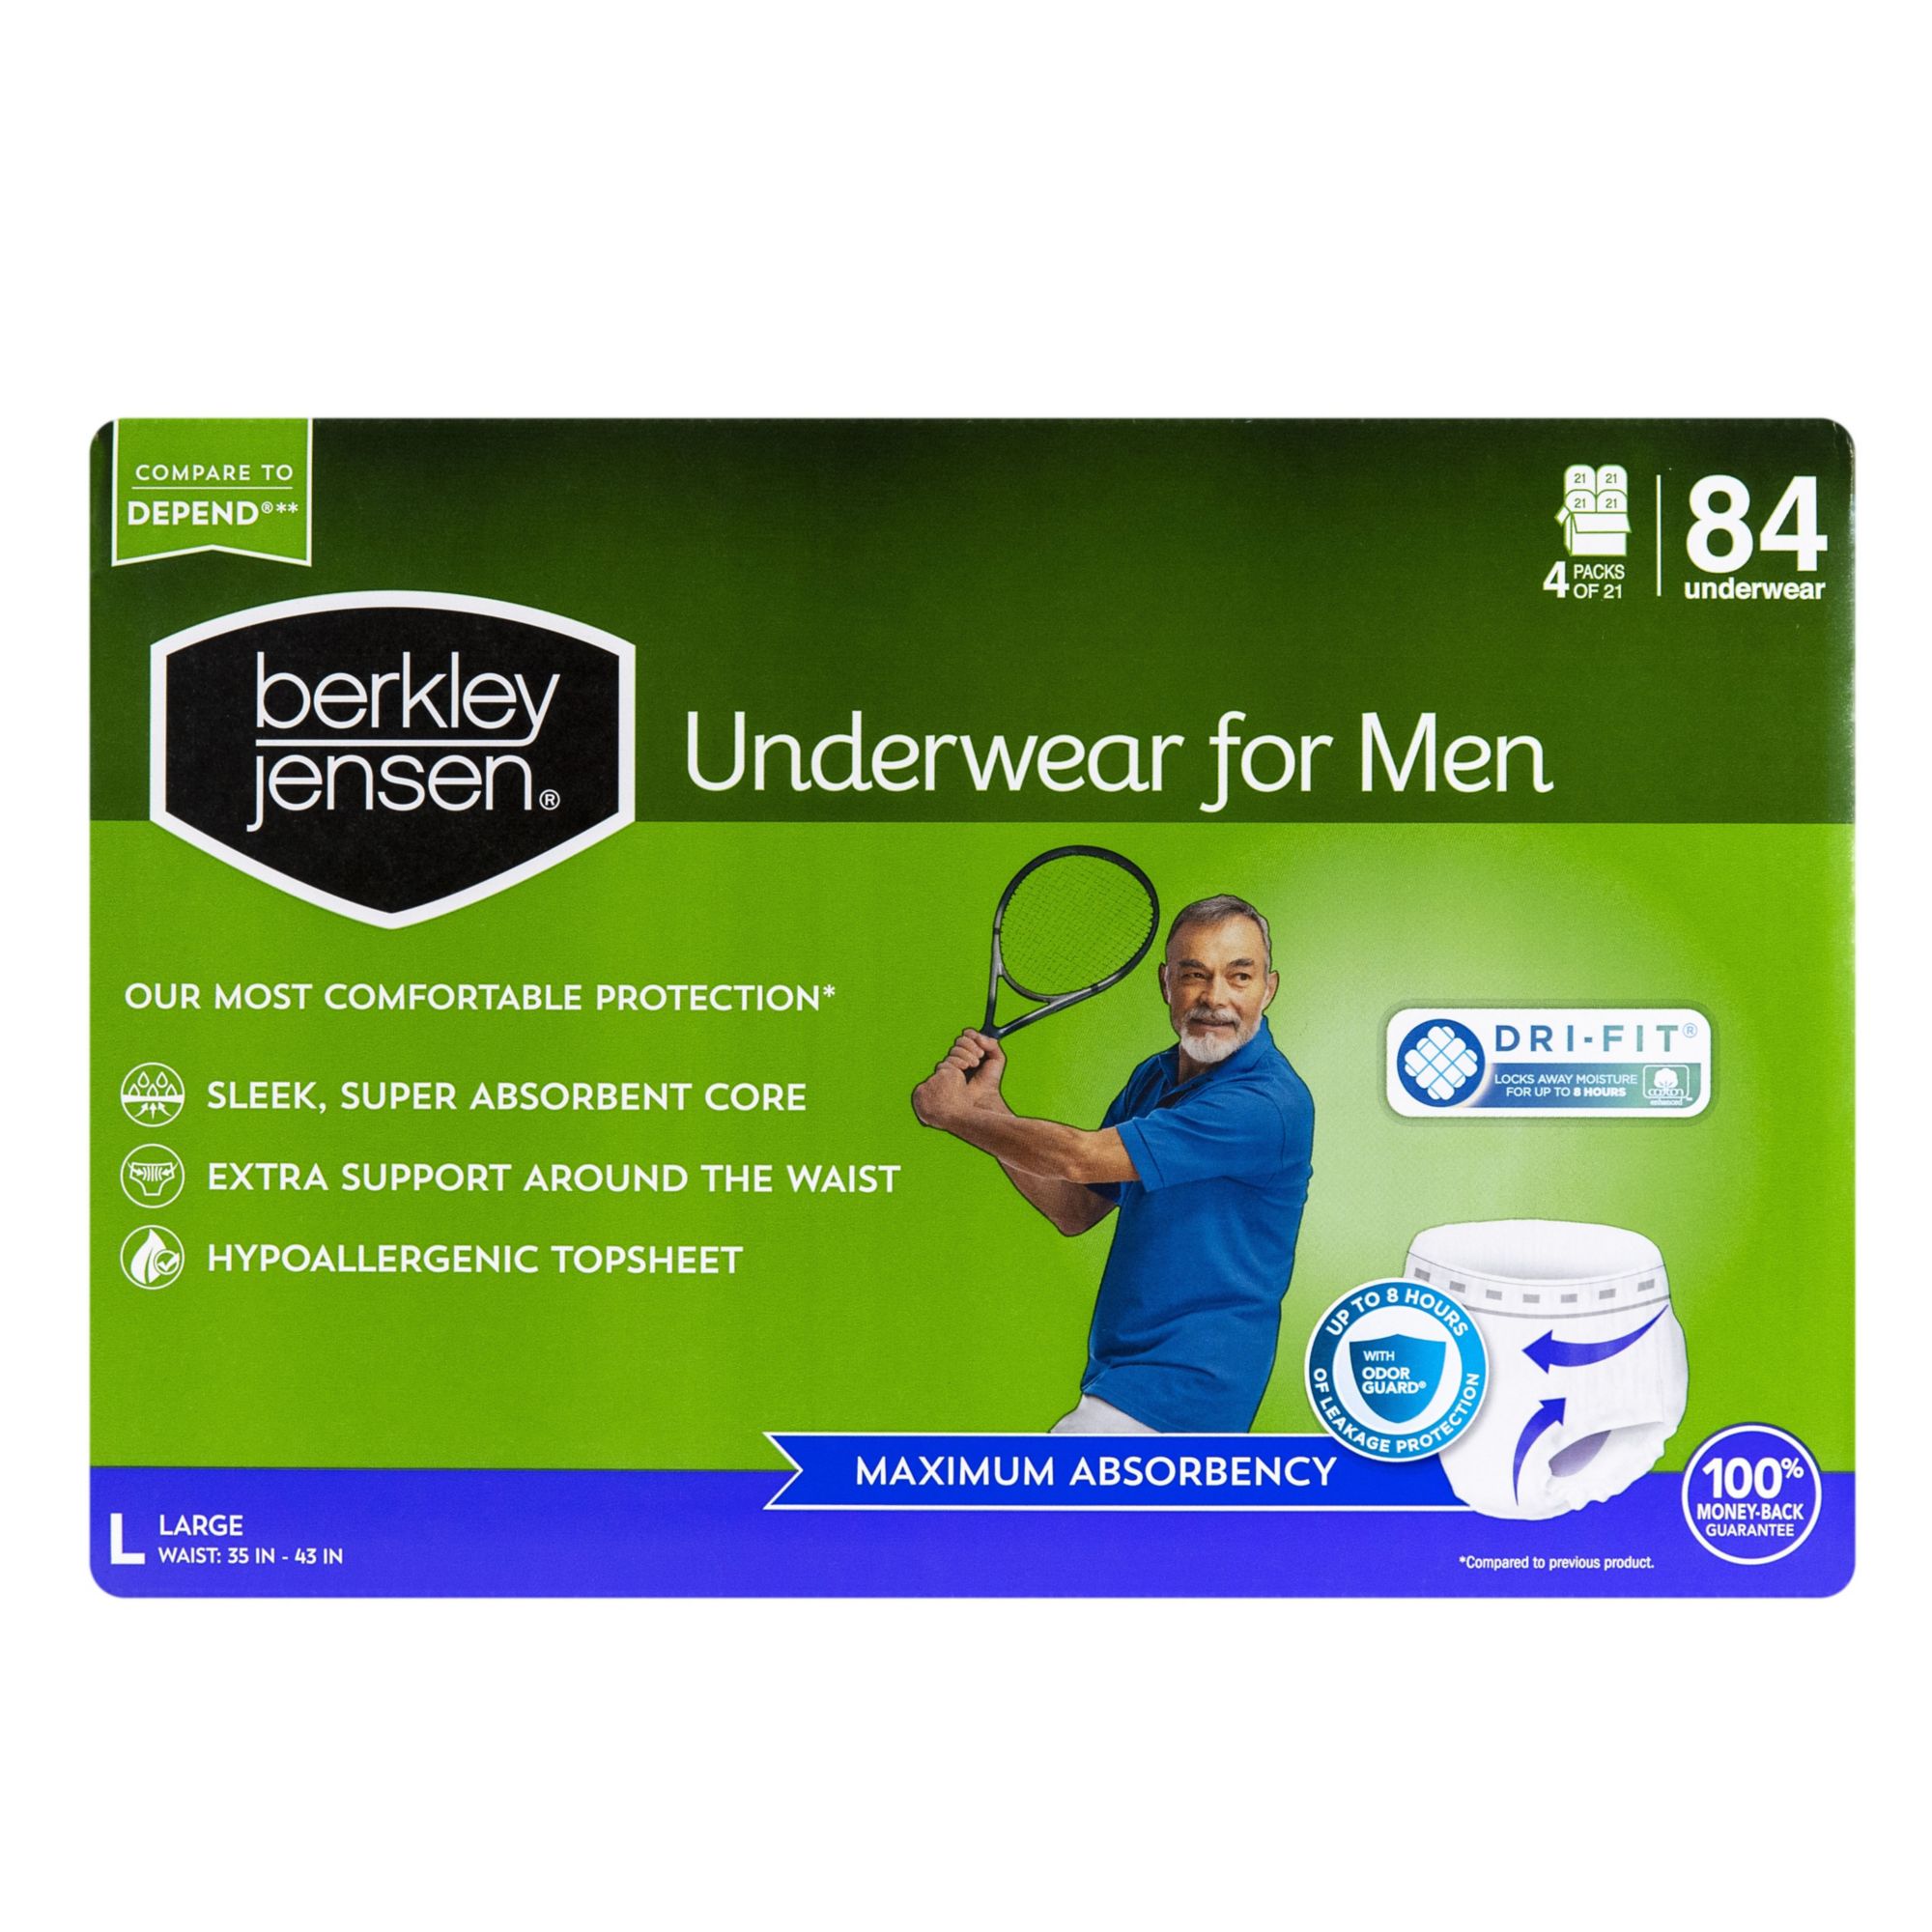 Berkley Jensen Incontinence Underwear for Men, Size Large, 84 ct